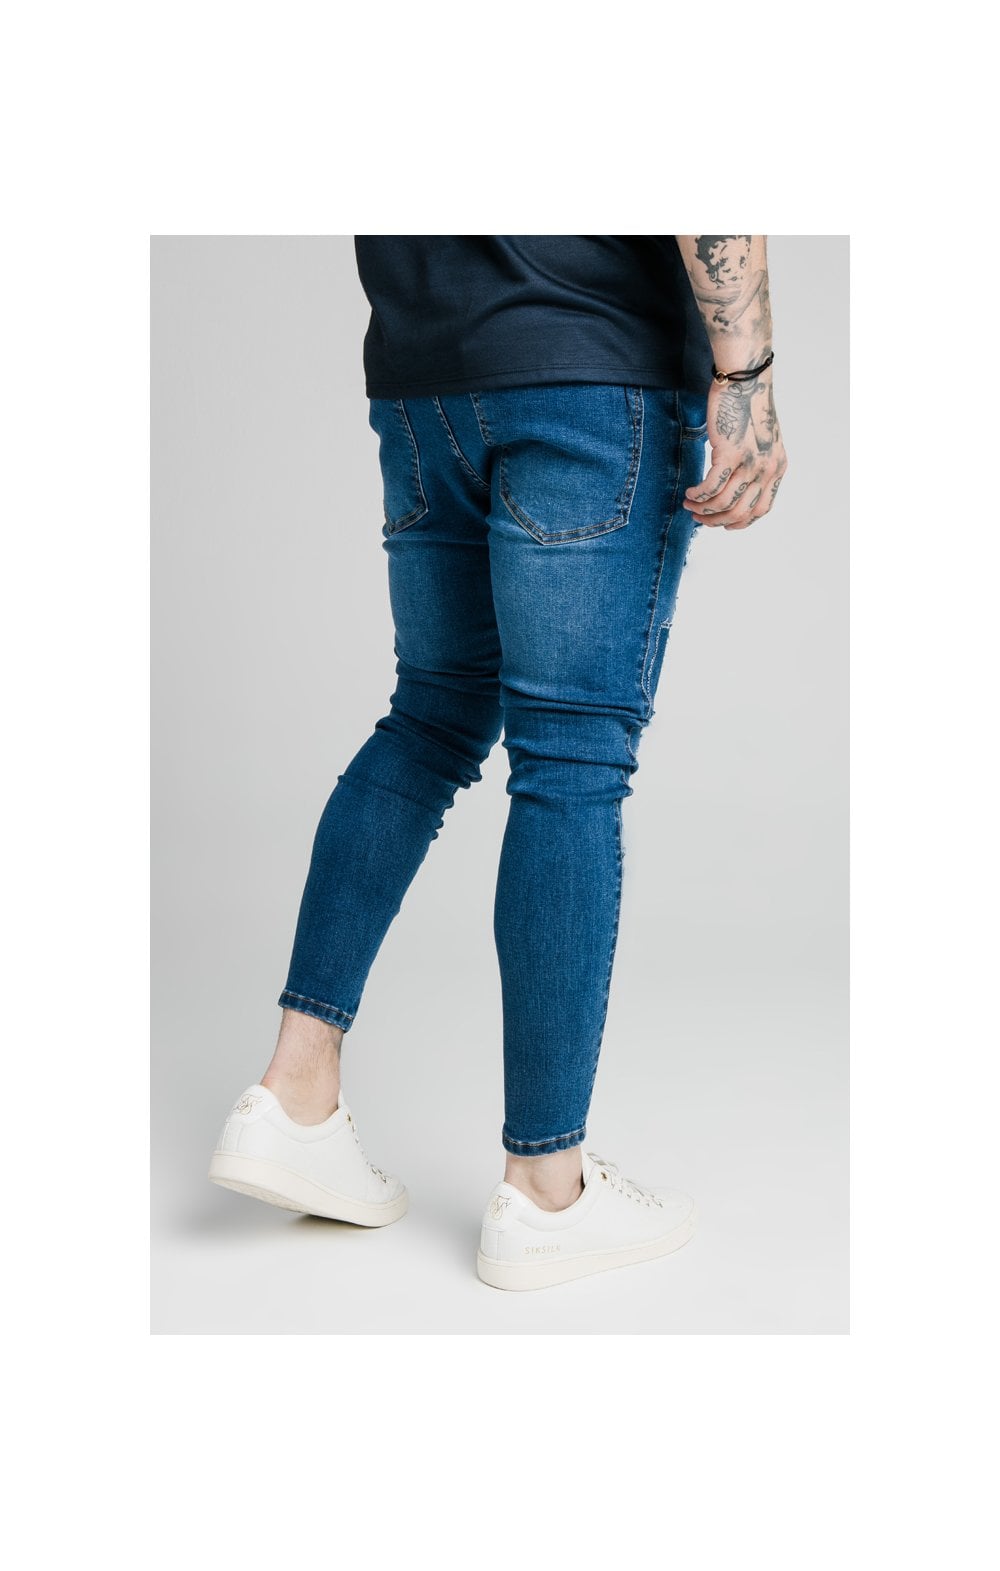 SikSilk Skinny Distressed Patch Jeans - Midstone (2)